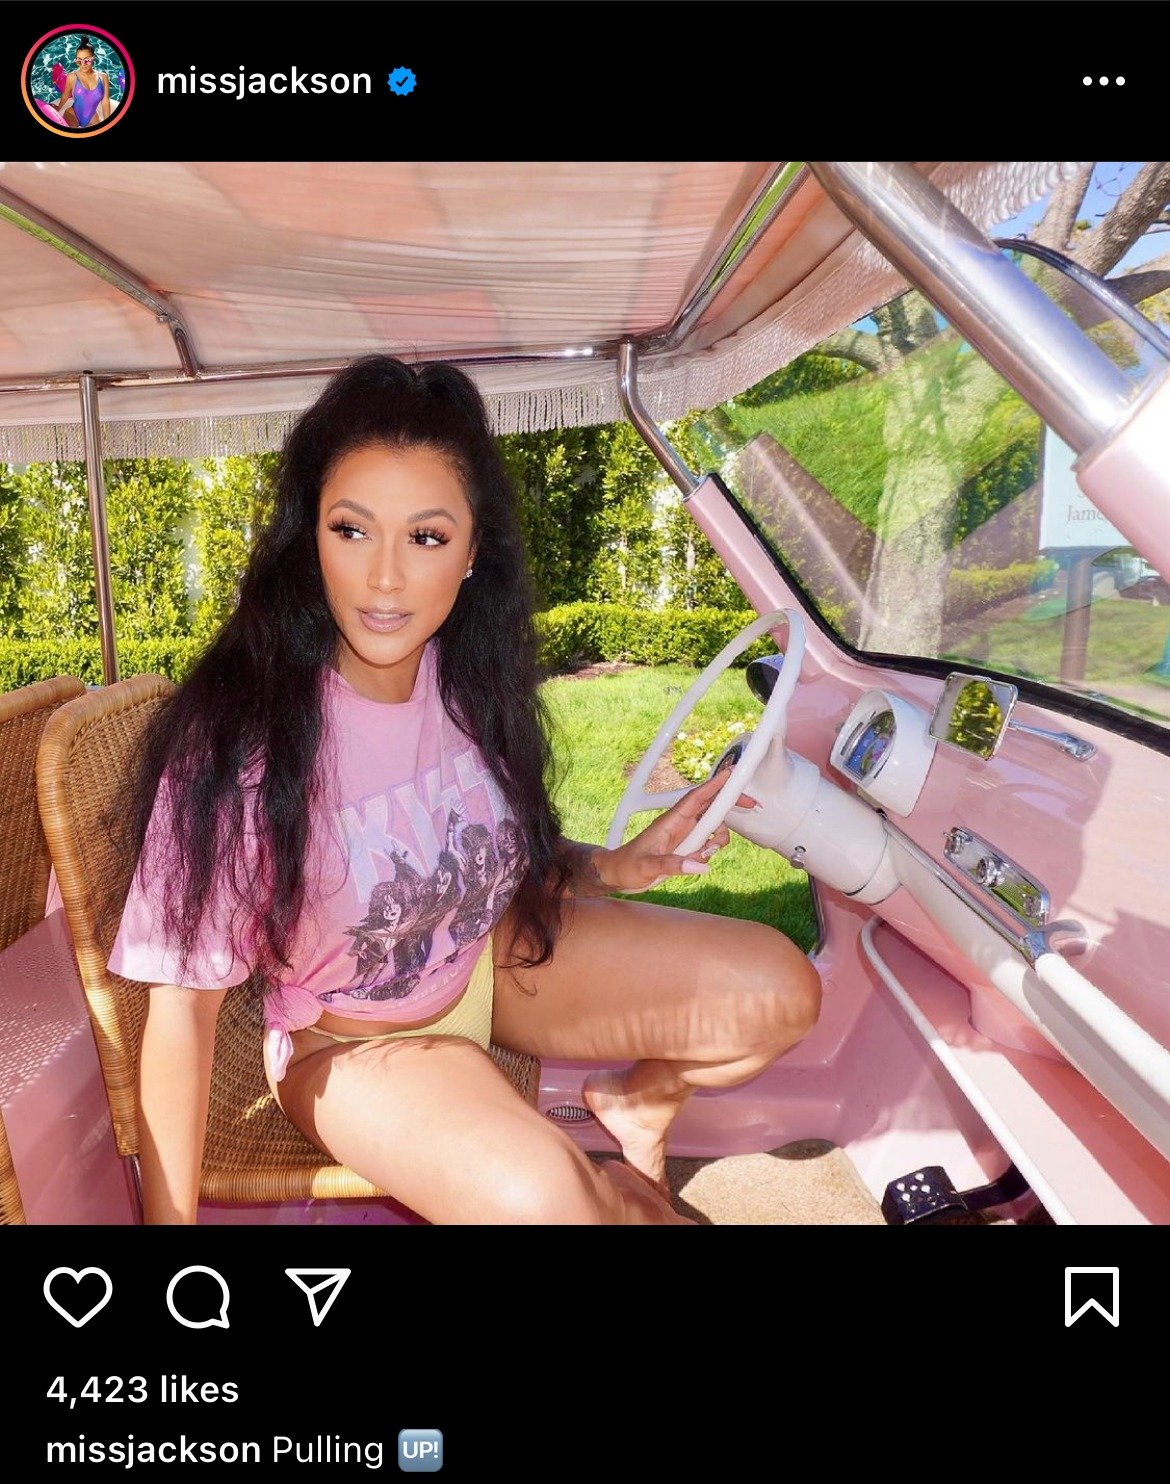 Shantel Jackson displaying her legs as she rode a pink golf cart in an oversized shirt and underwear. | Photo: instagram.com/missjackson